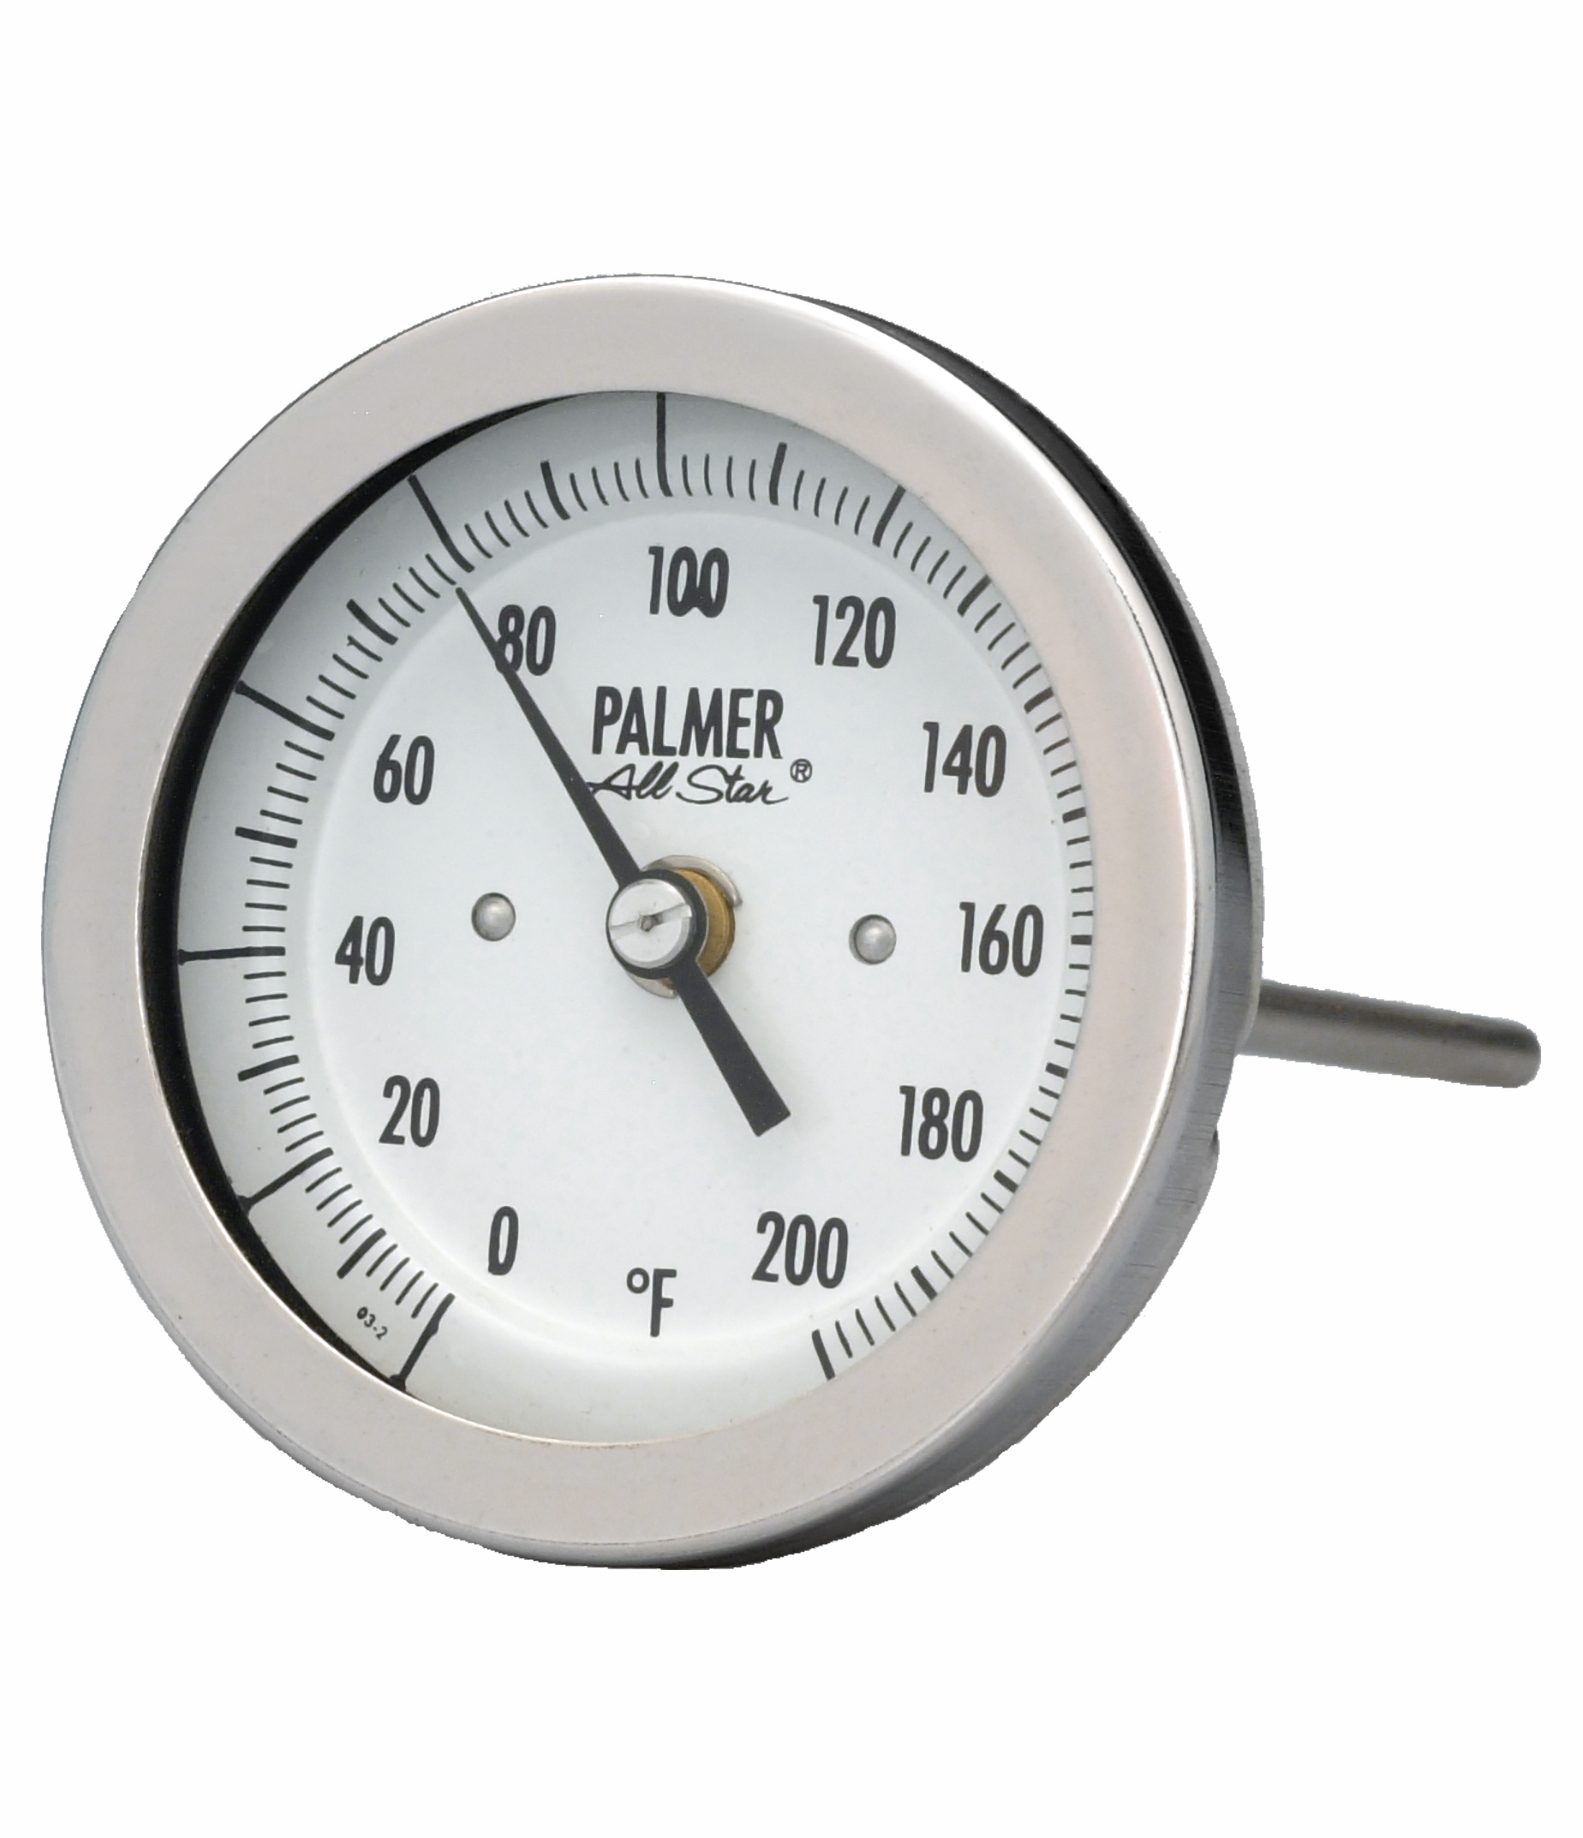 Thermometer Analog Bimetall 120°C Anlegethermometer